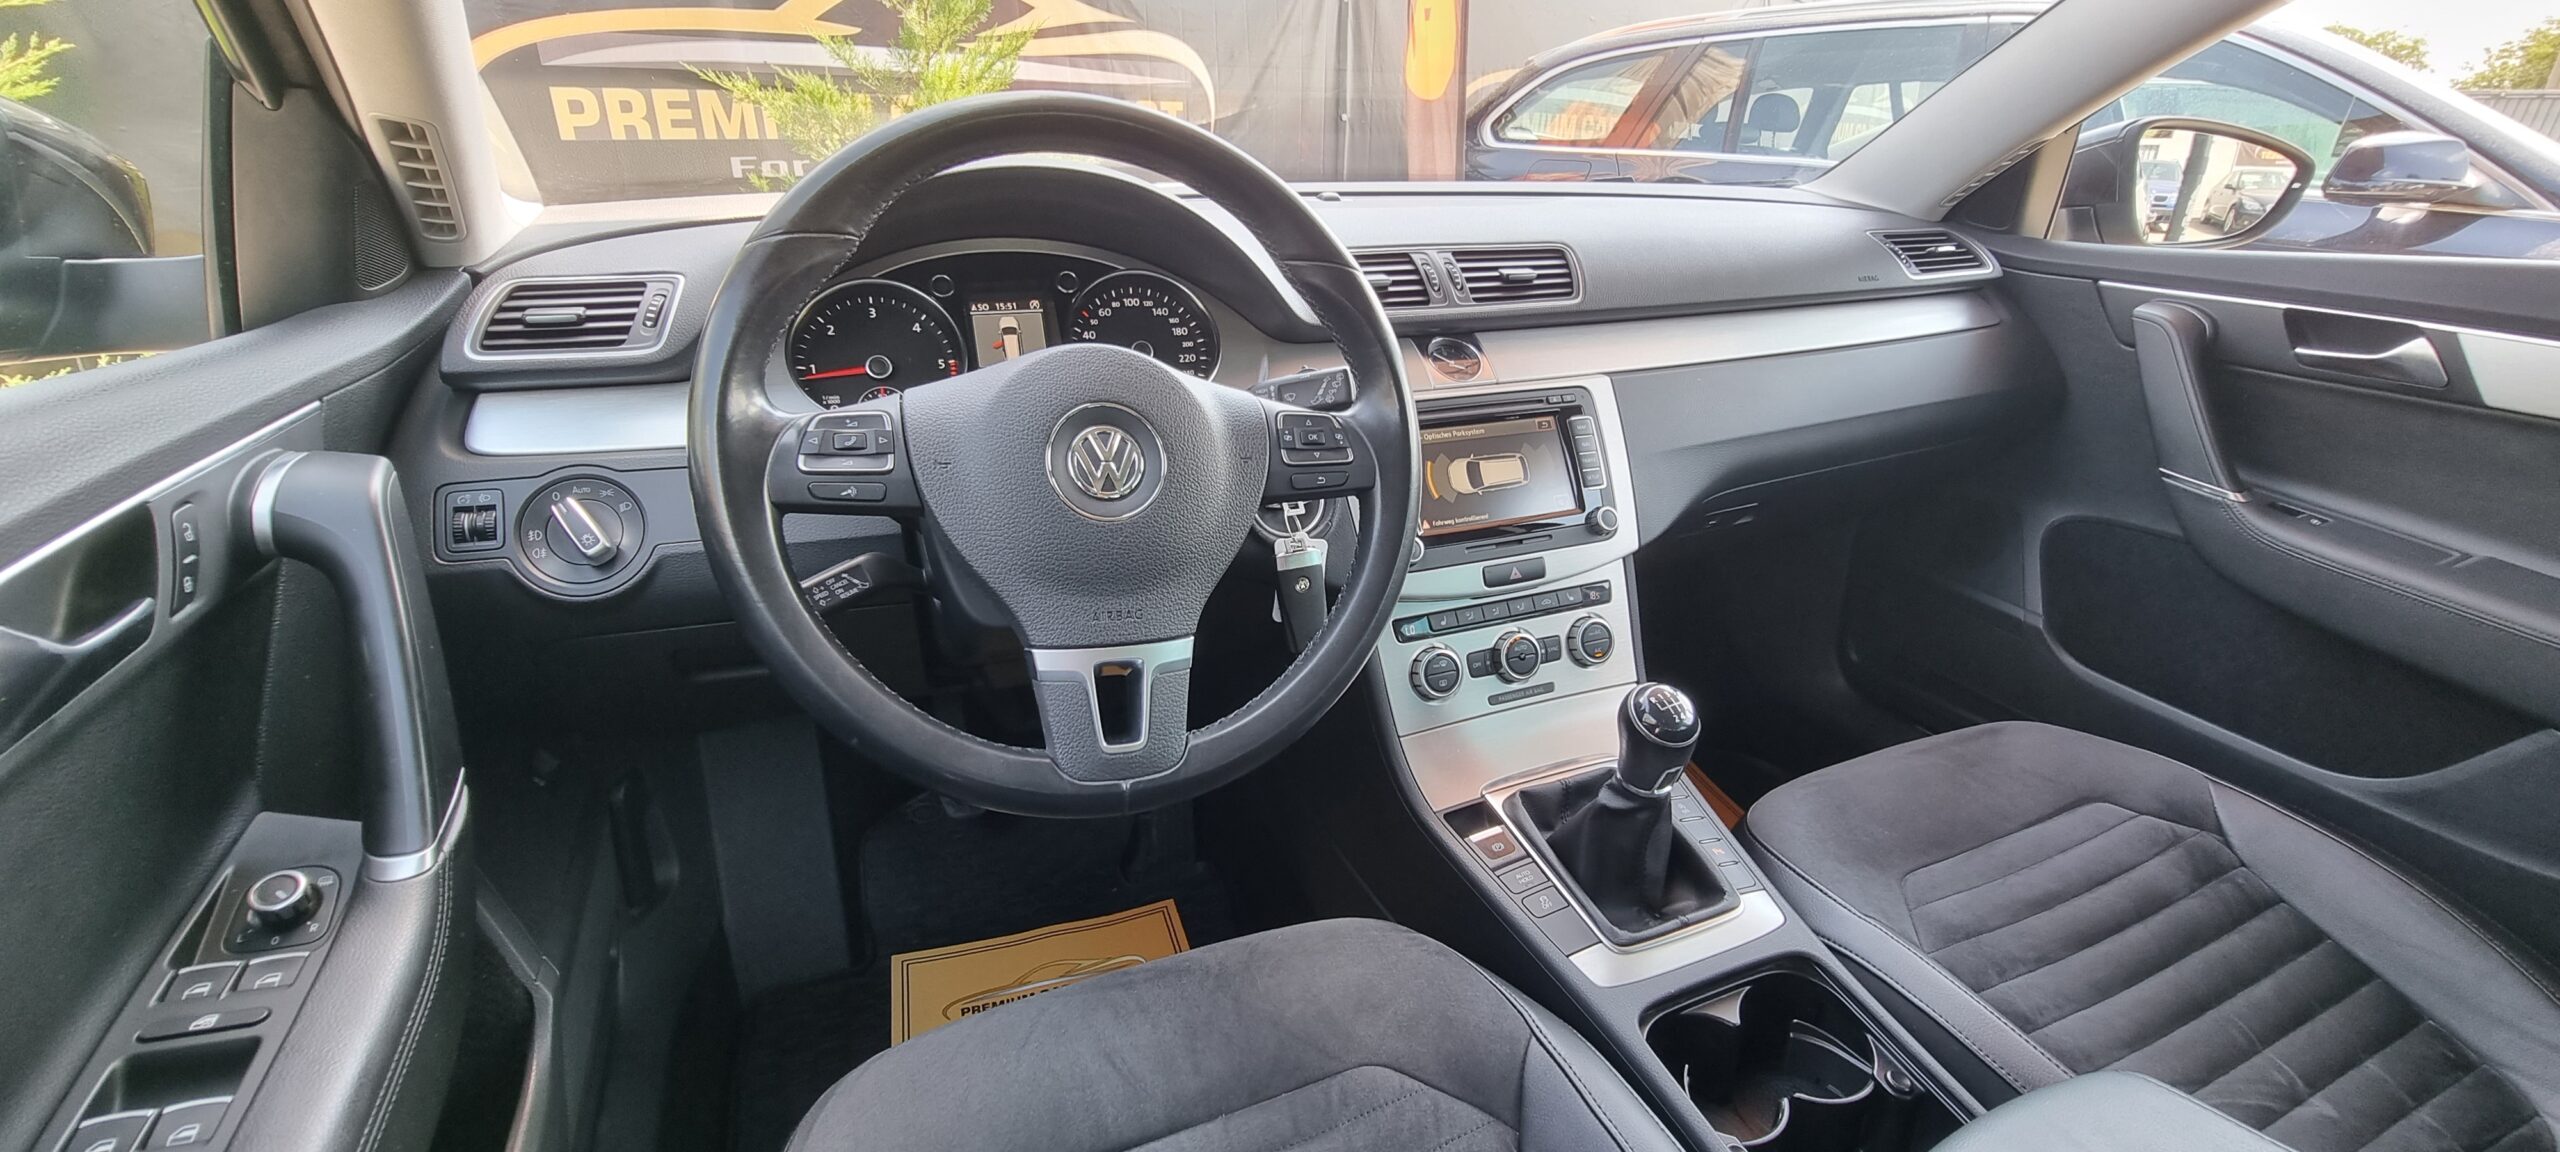 VW PASSAT , 2.0 TDI, 140 CP, EURO 5, AN 2013